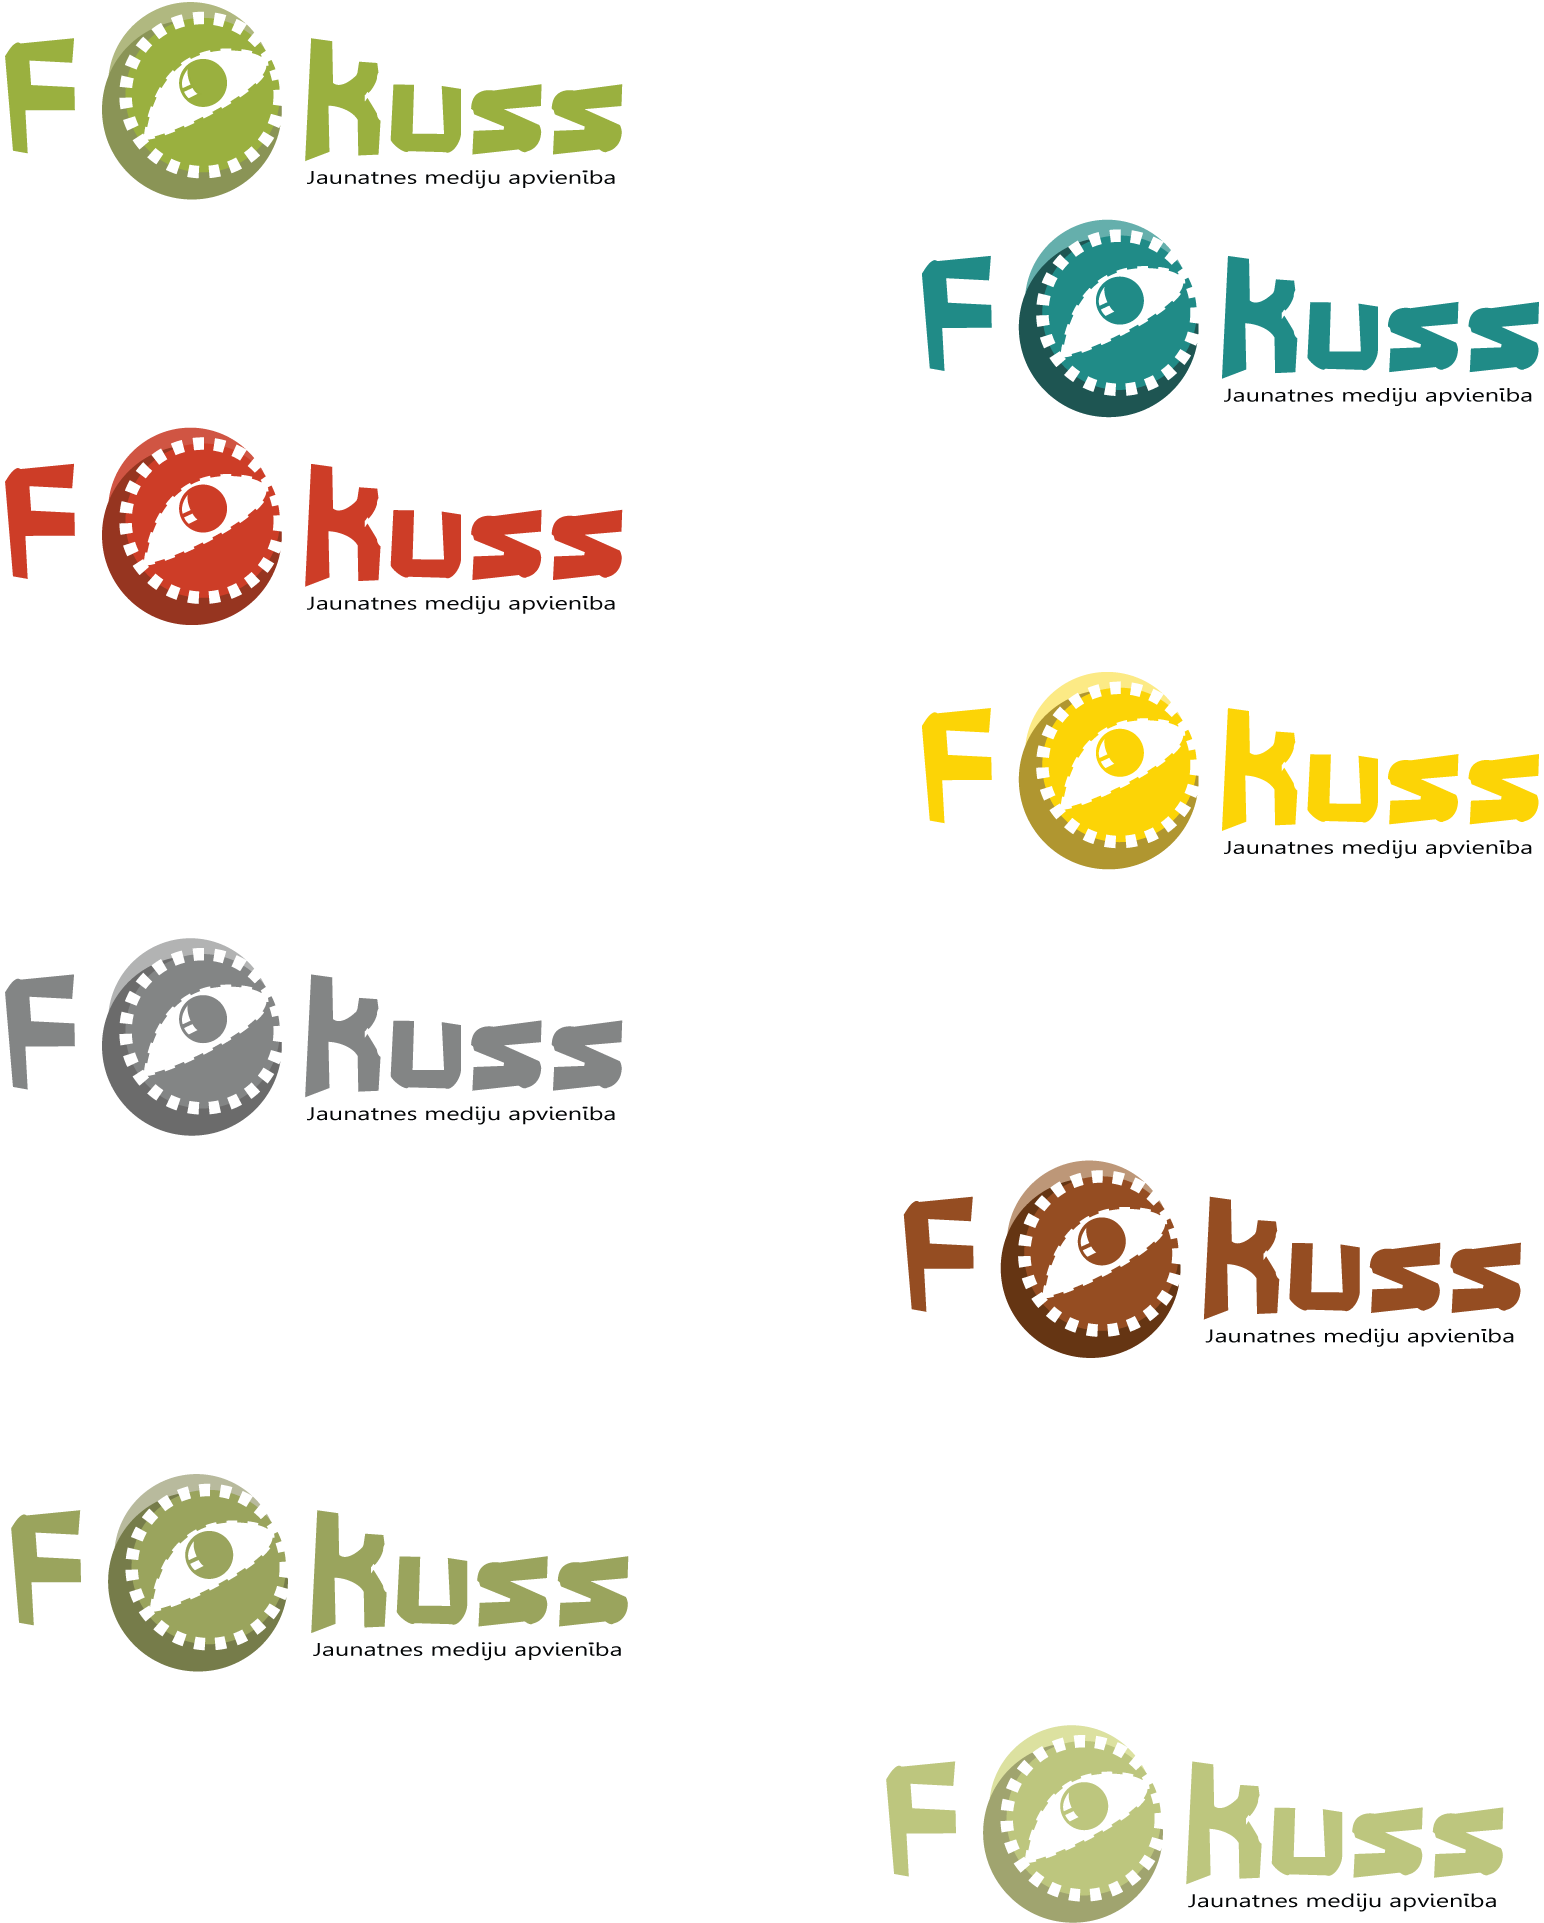 Fokuss logo 2